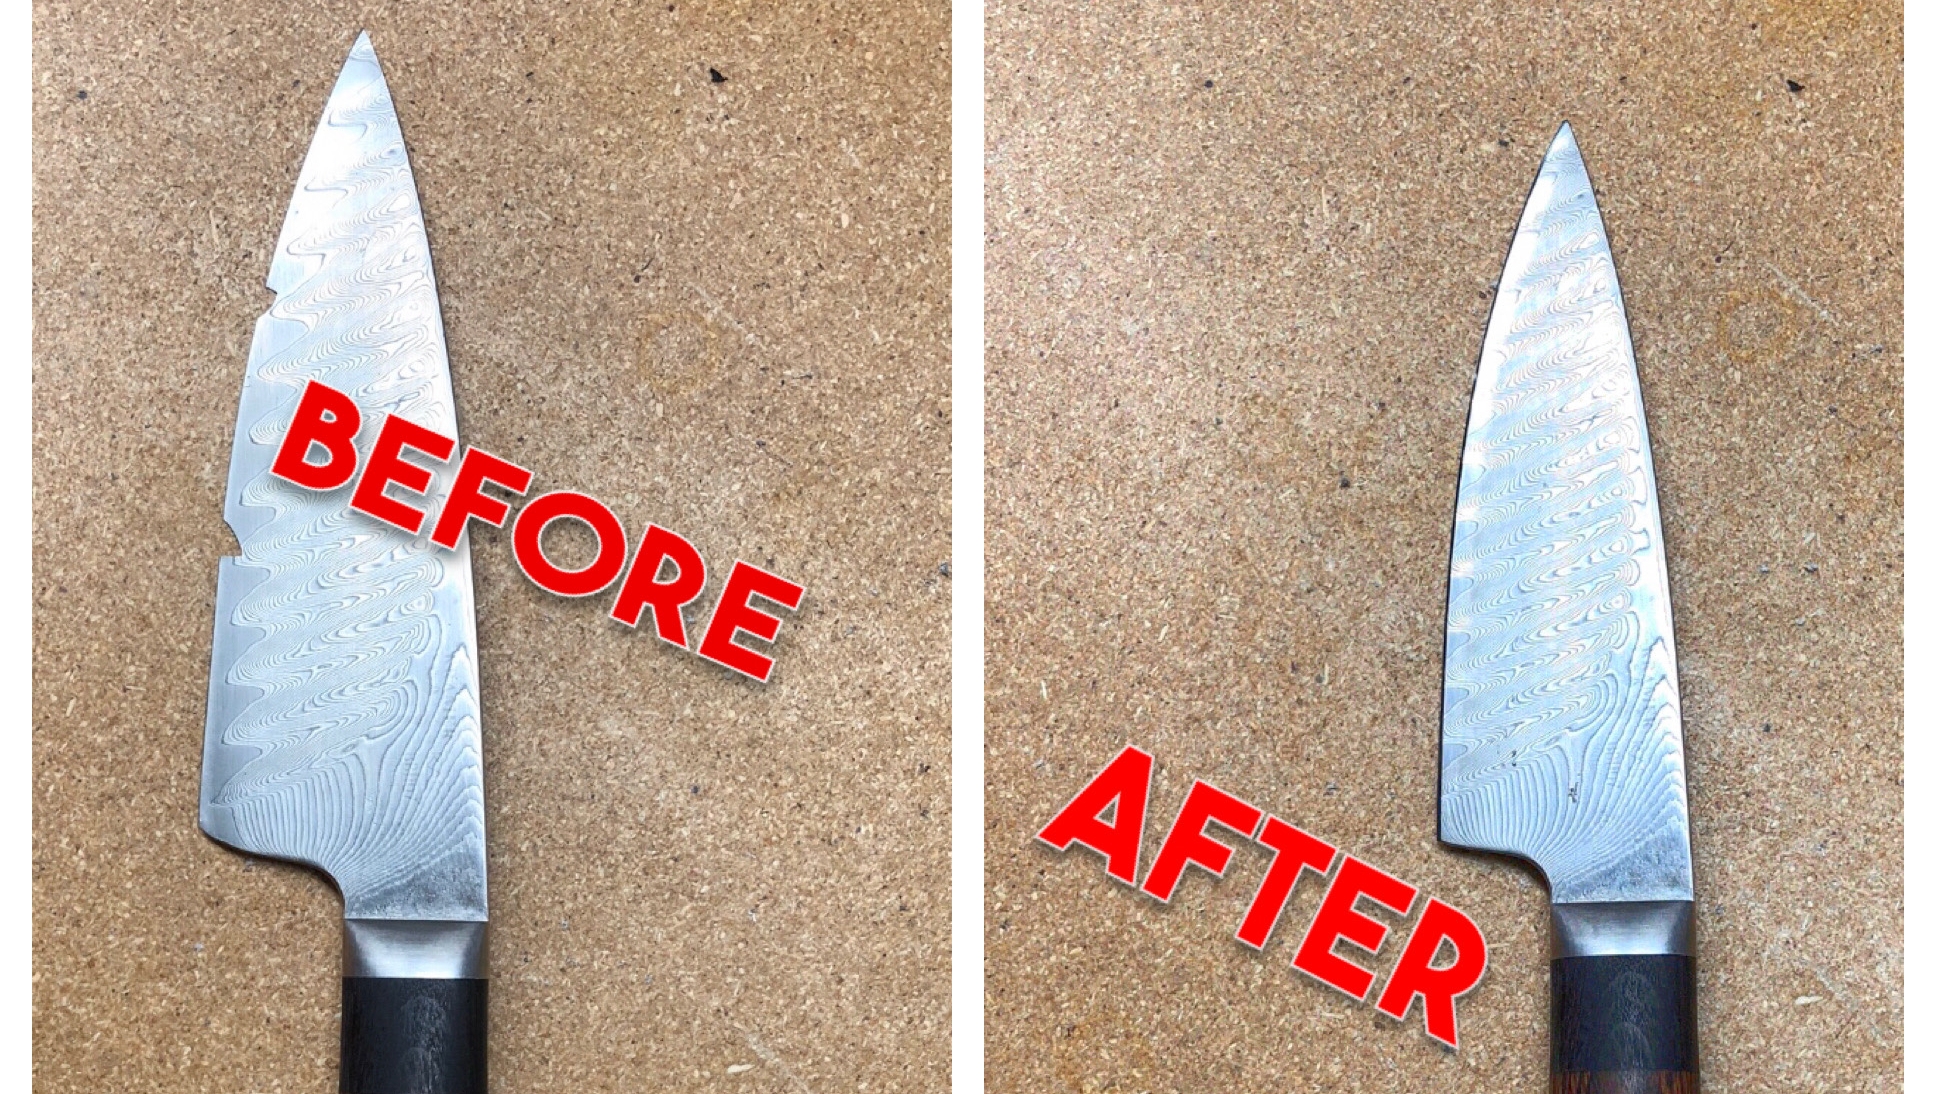 How to maintain a razor-sharp knife